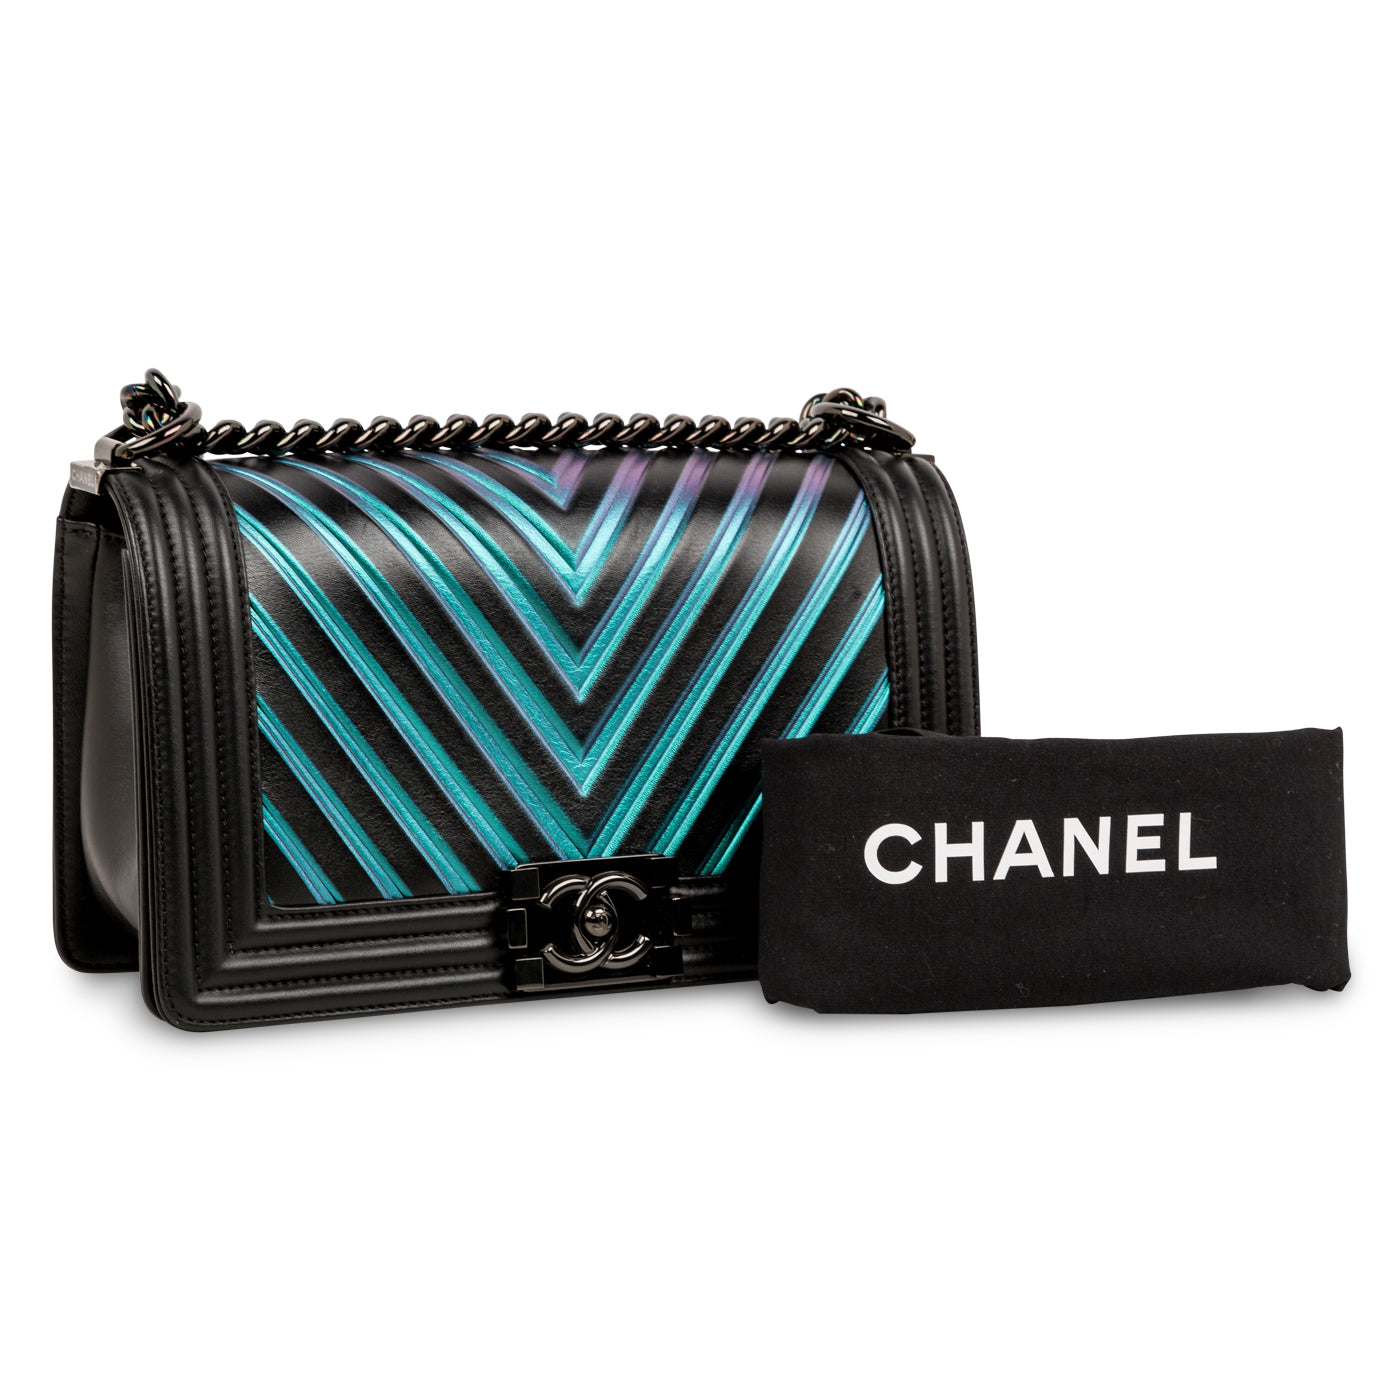 Chanel Iridescent Chevron Boy Bag! 🖤 #chanel #chanelbag